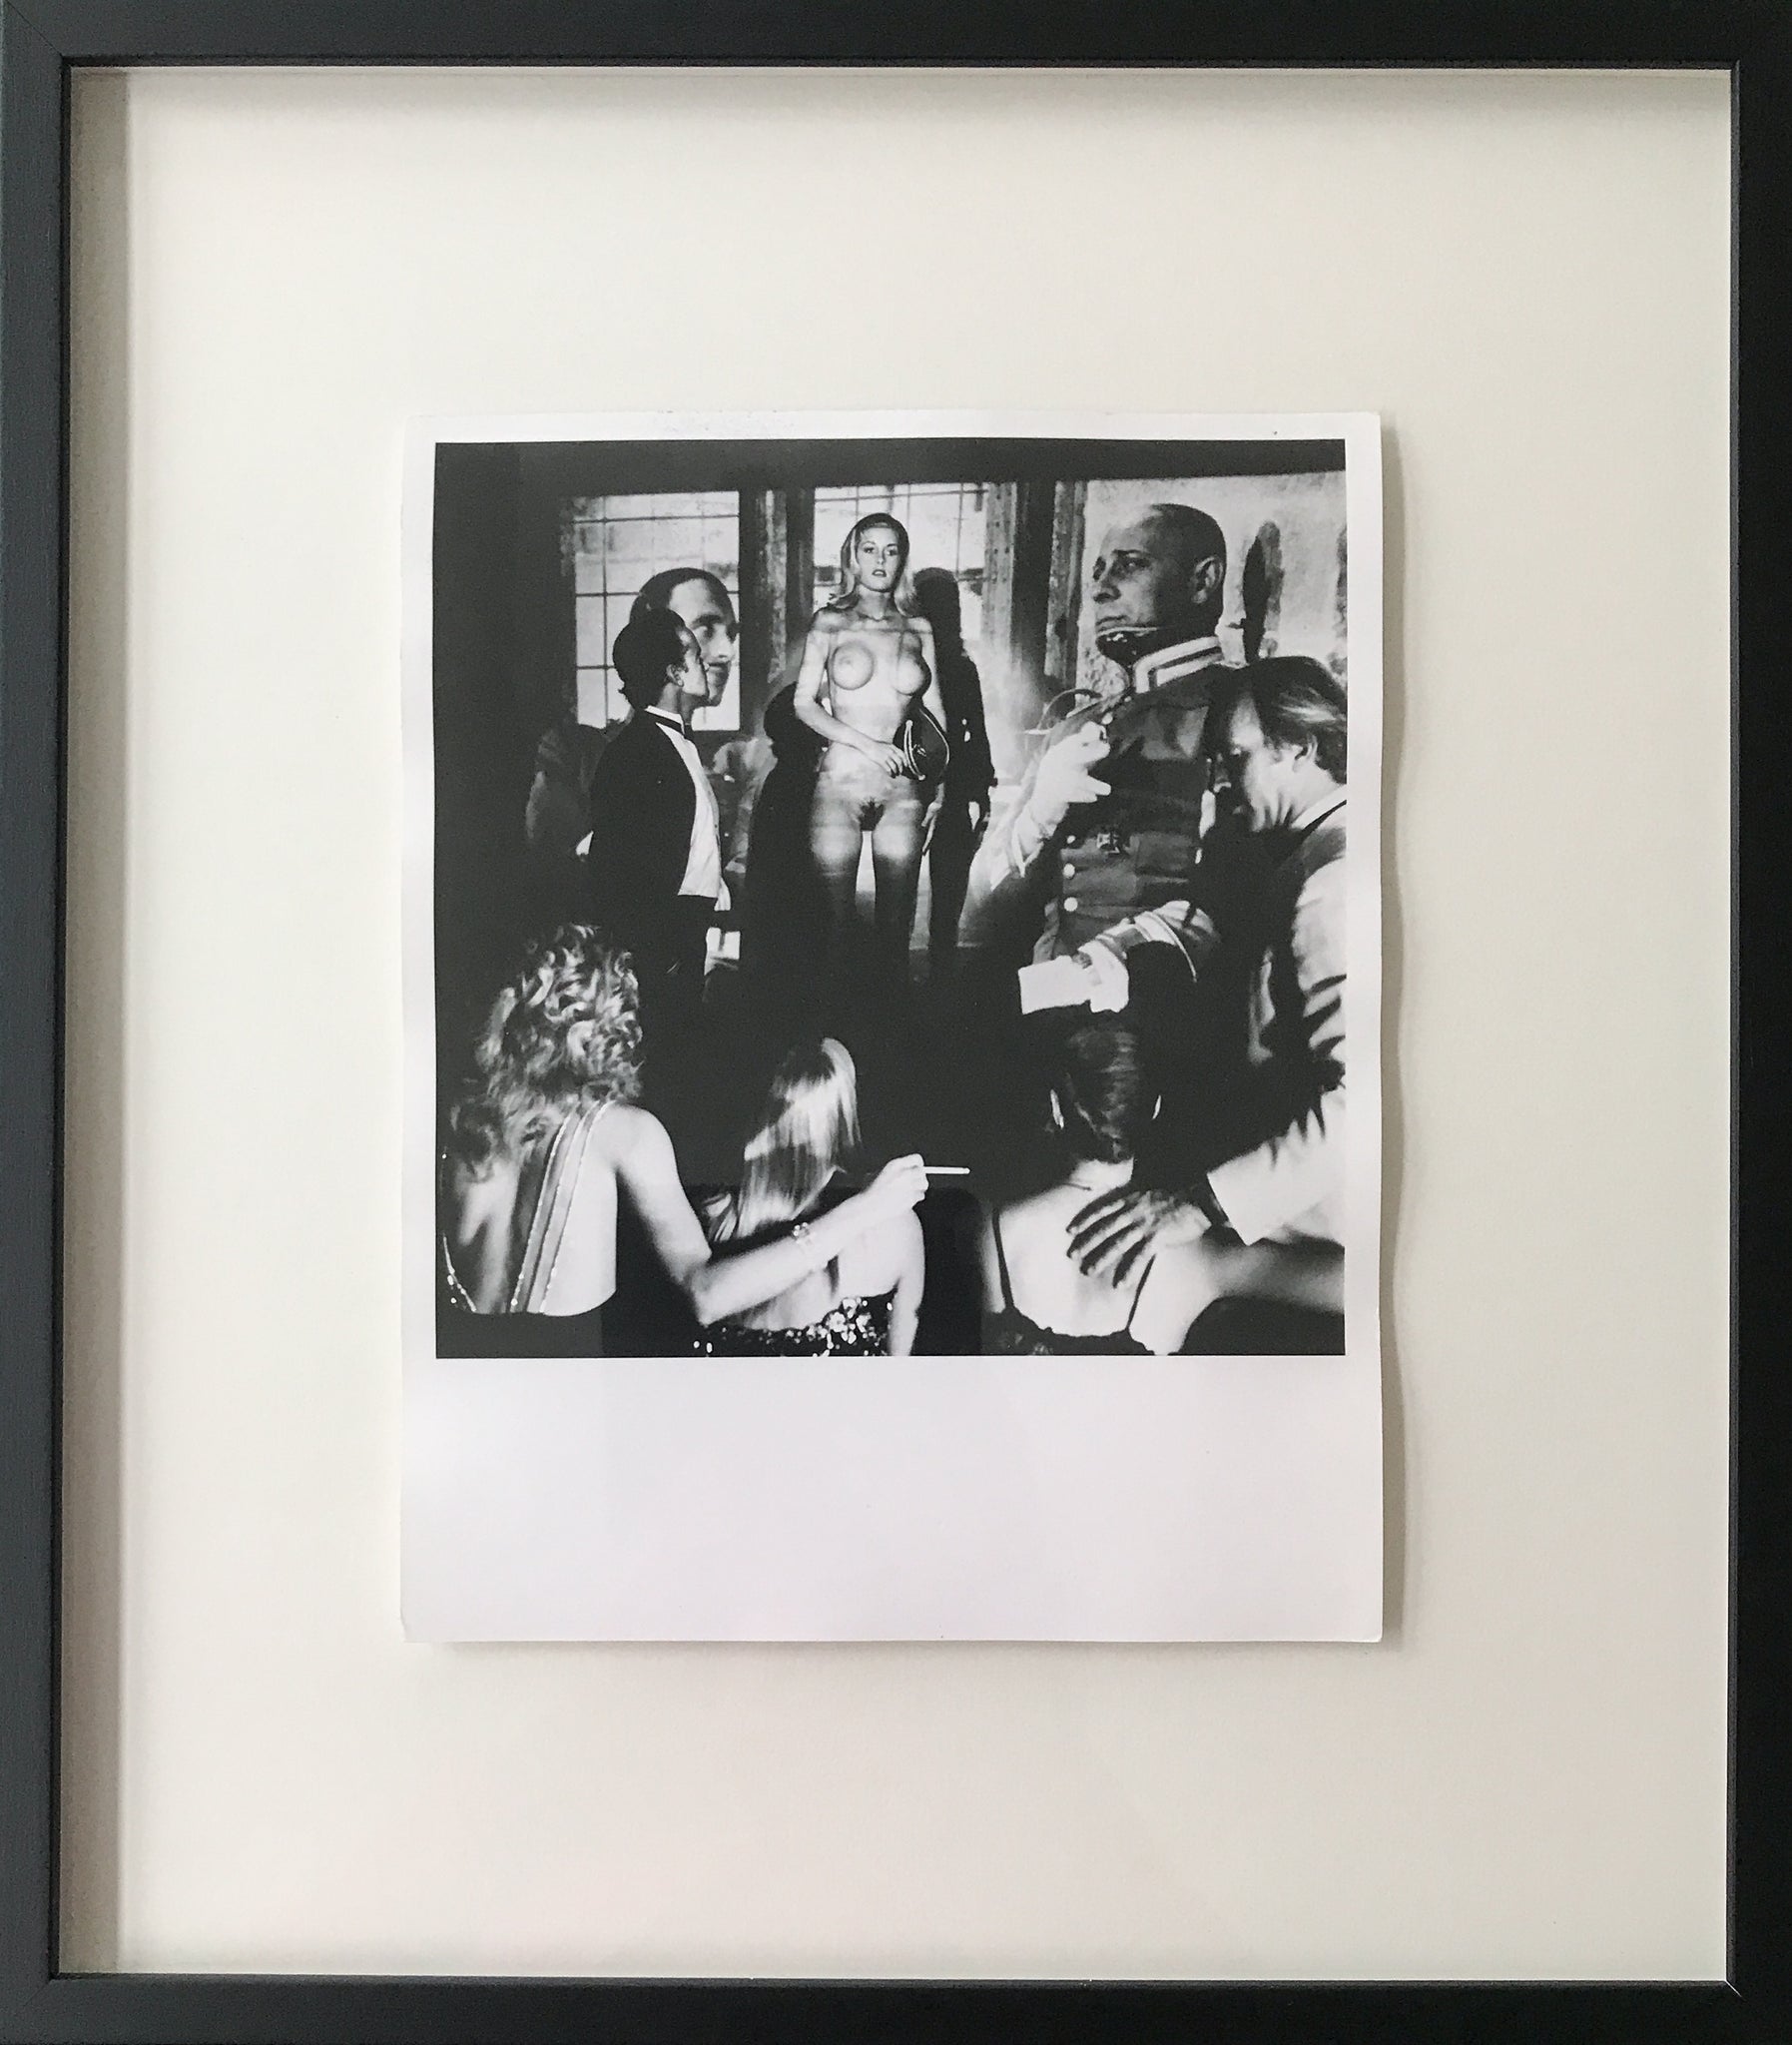 Helmut Newton: "Hugh Hefner’s Projection Room", Beverly Hills, 1986